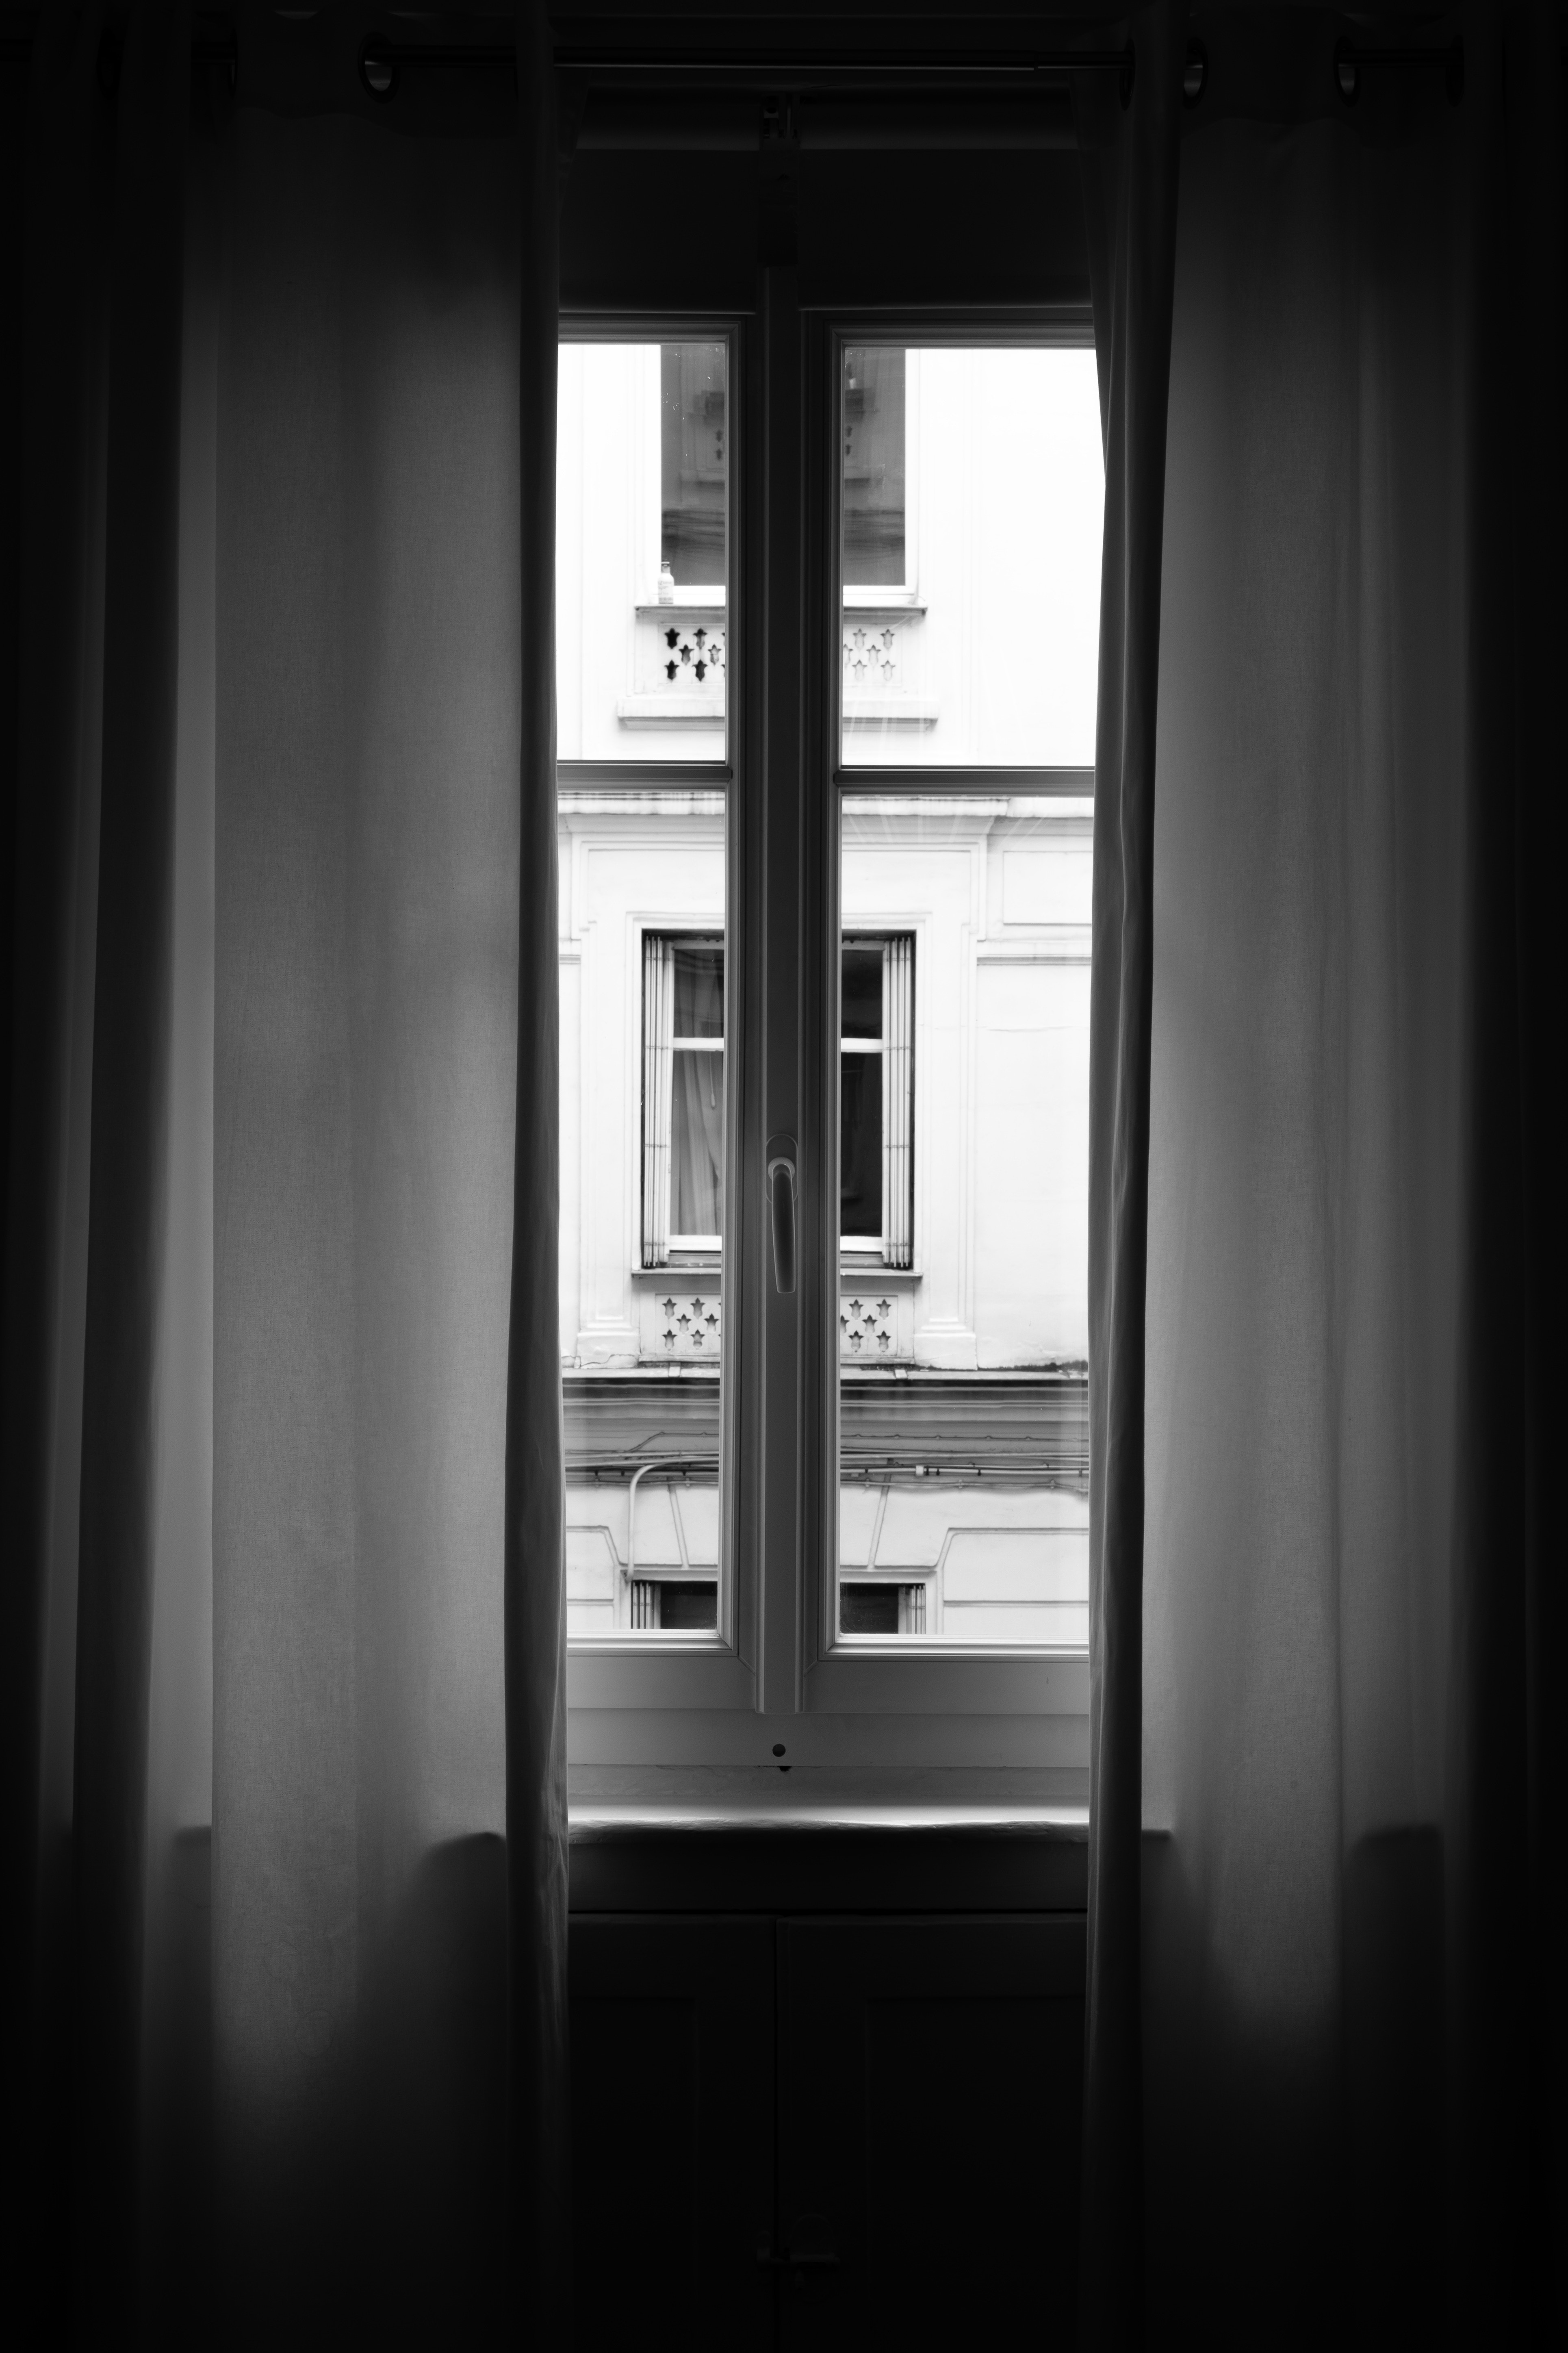 window, interior, miscellanea, miscellaneous, bw, chb, view, curtains